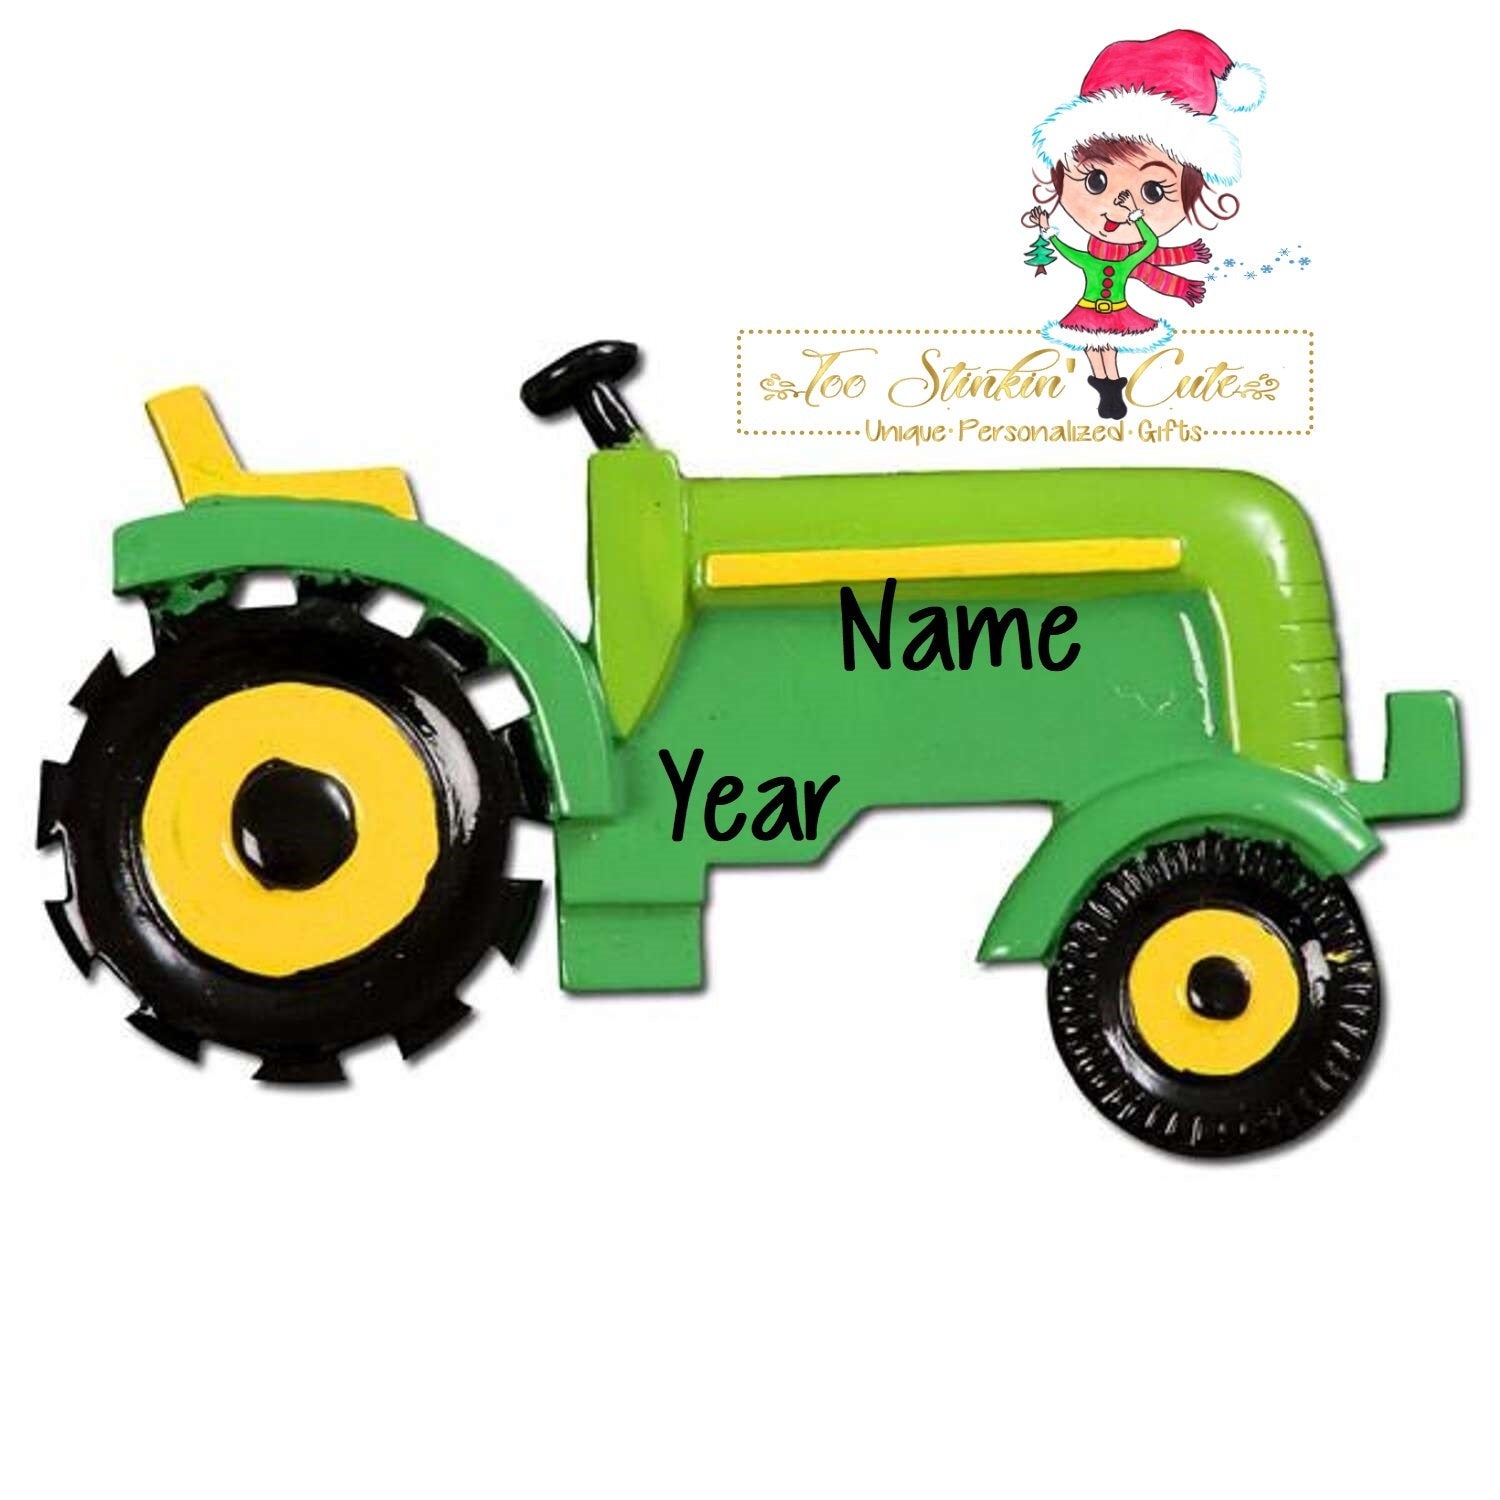 Personalized Christmas Ornament Green Tractor Equipment Farm Farmer Boys Kids + Free Shipping!